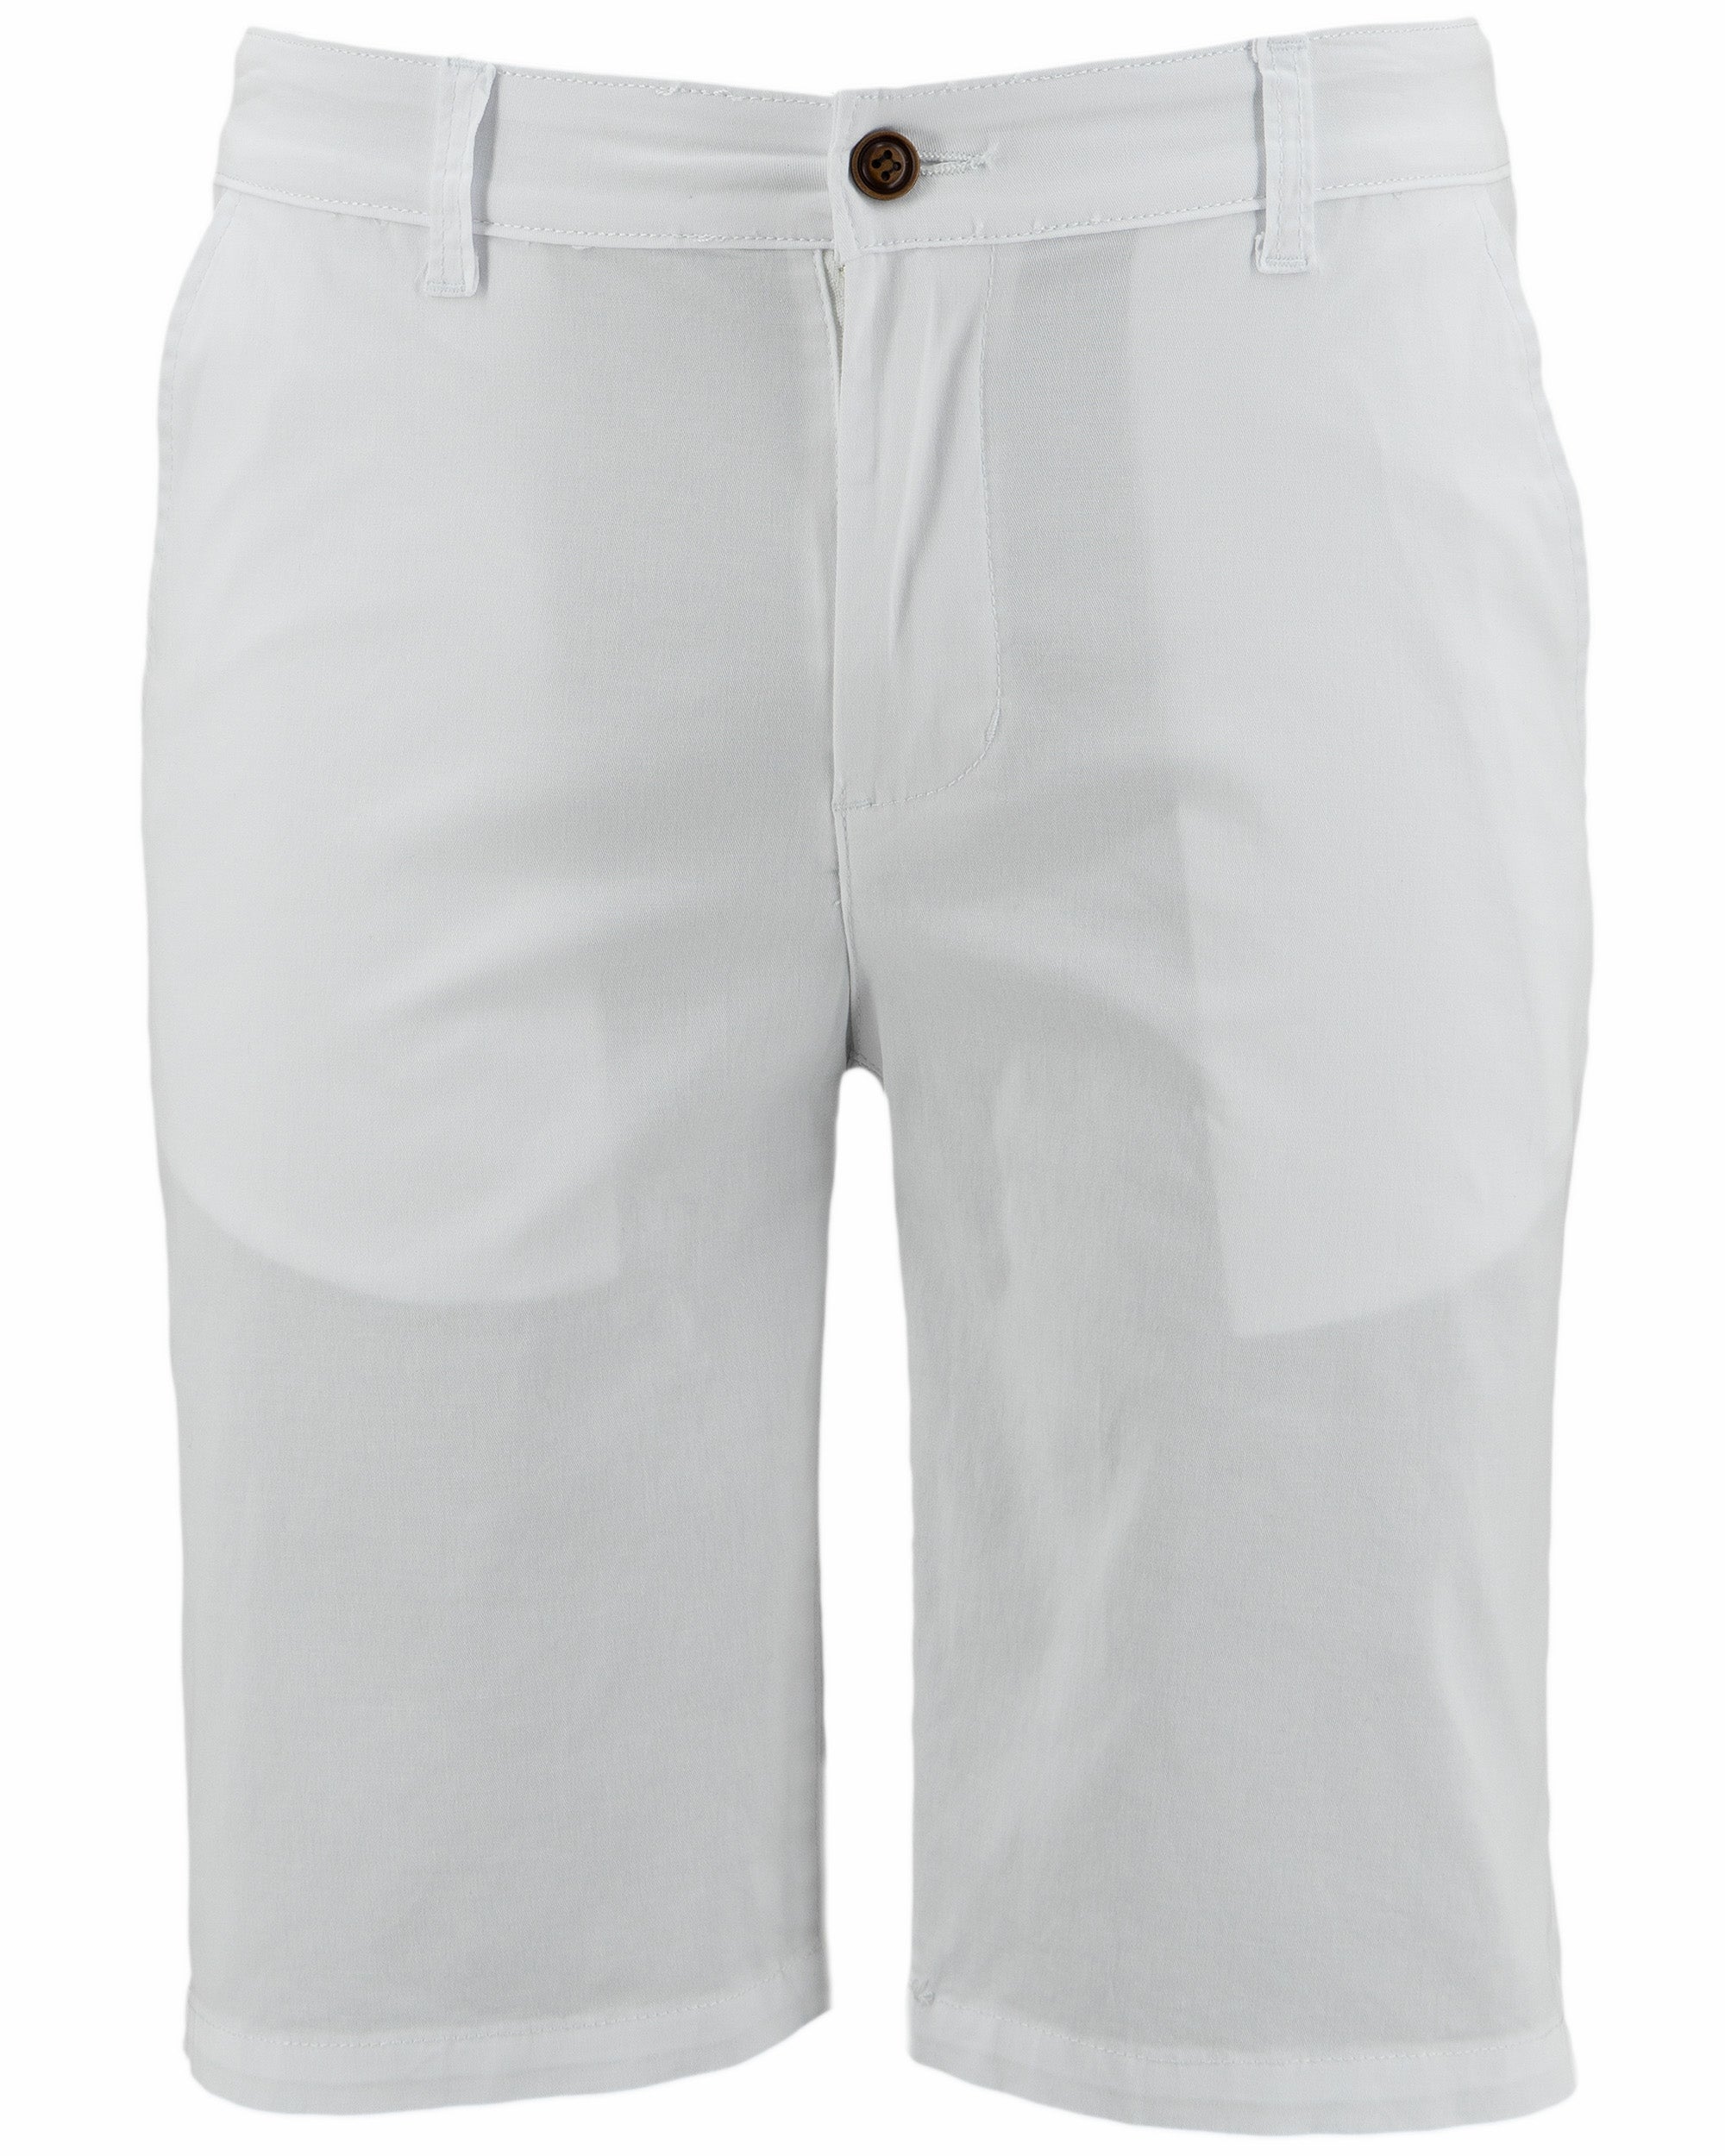 pantalon-corto-1492-casual-p-caballeros-2